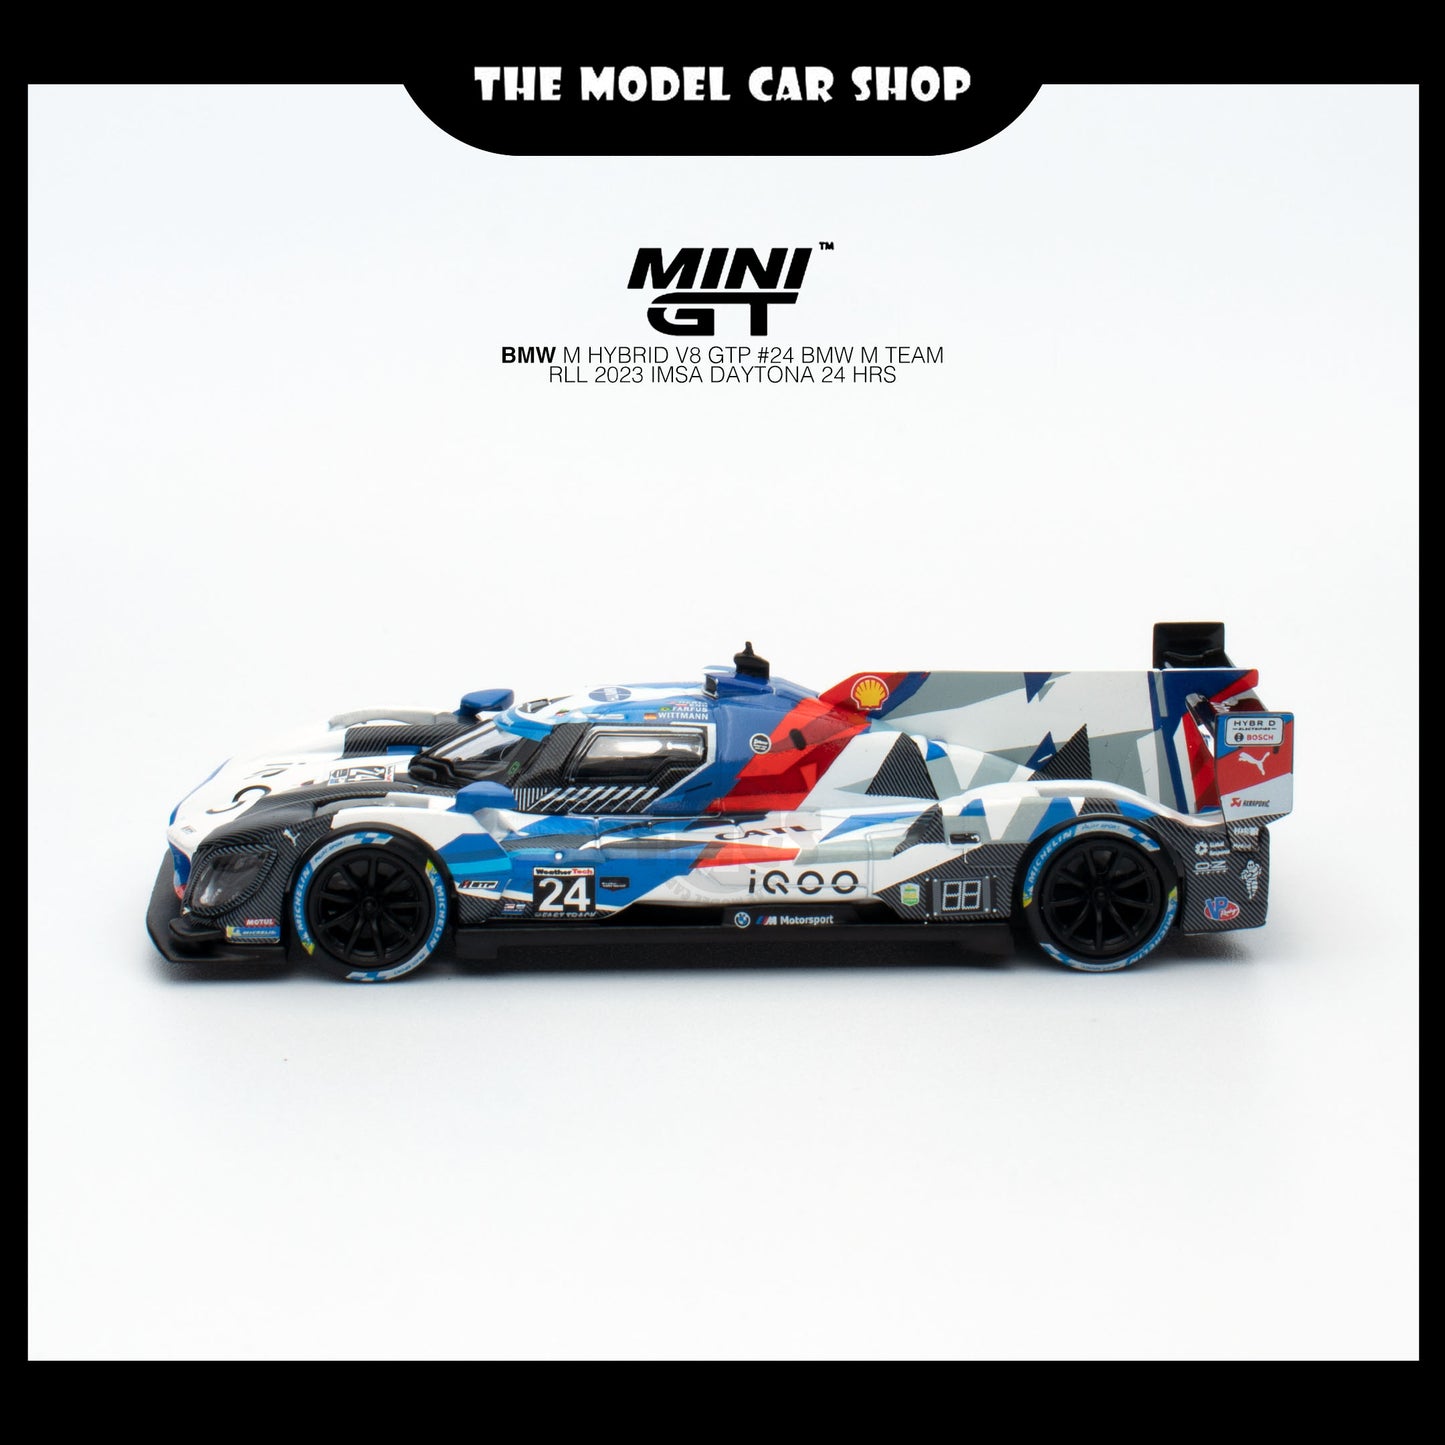 [MINI GT] BMW M Hybrid V8 GTP #24 BMW M Team RLL 2023 IMSA Daytona 24 Hrs